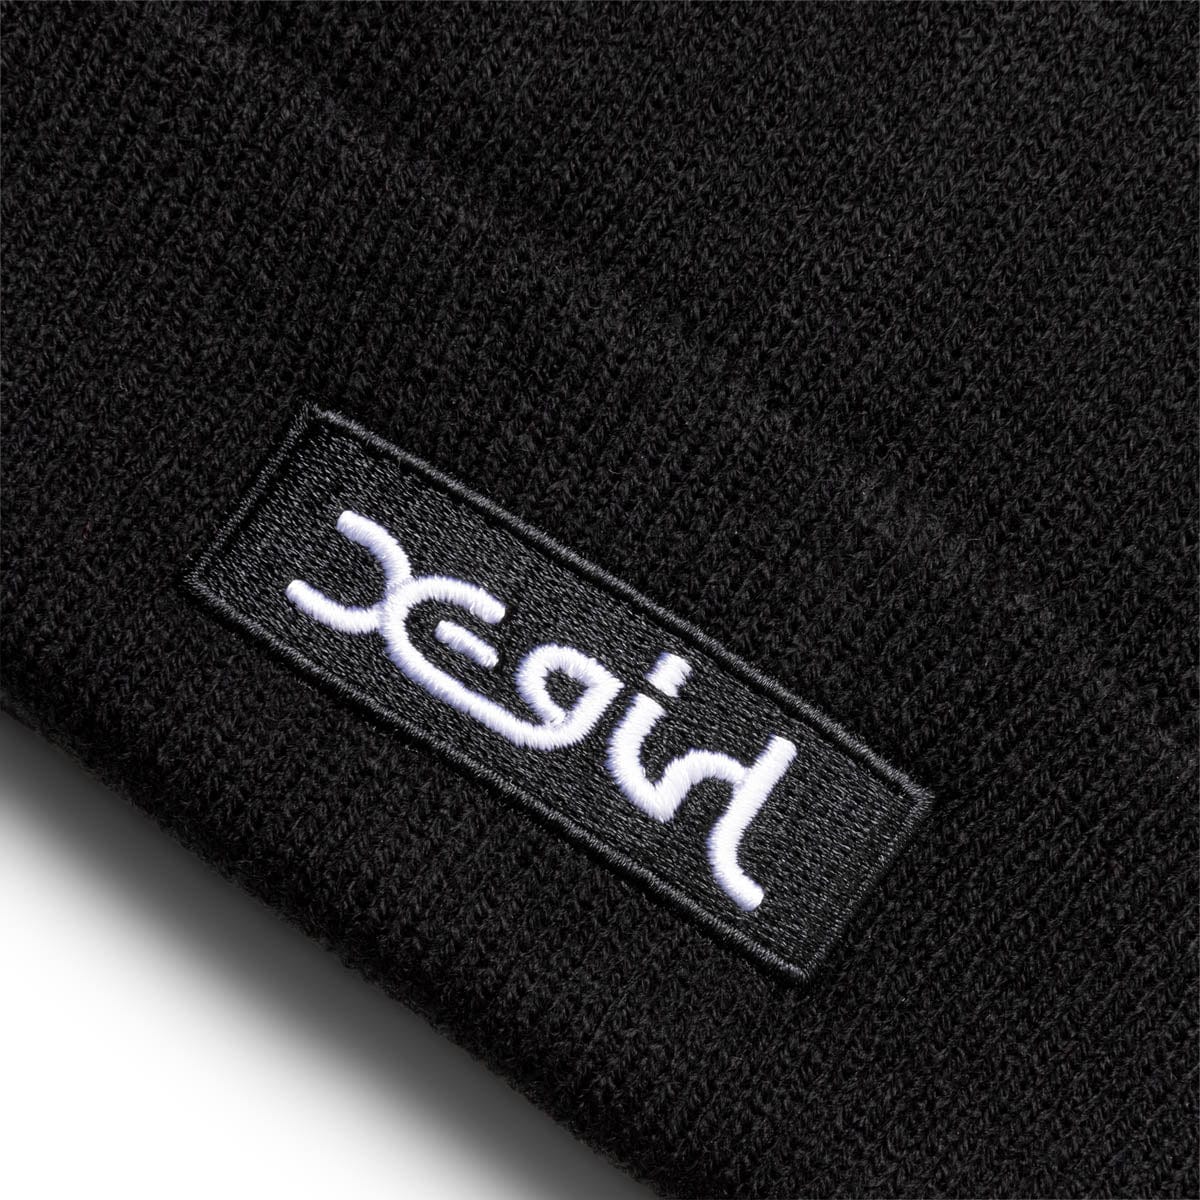 X-Girl Headwear BLACK / O/S BOX LOGO KNIT CAP